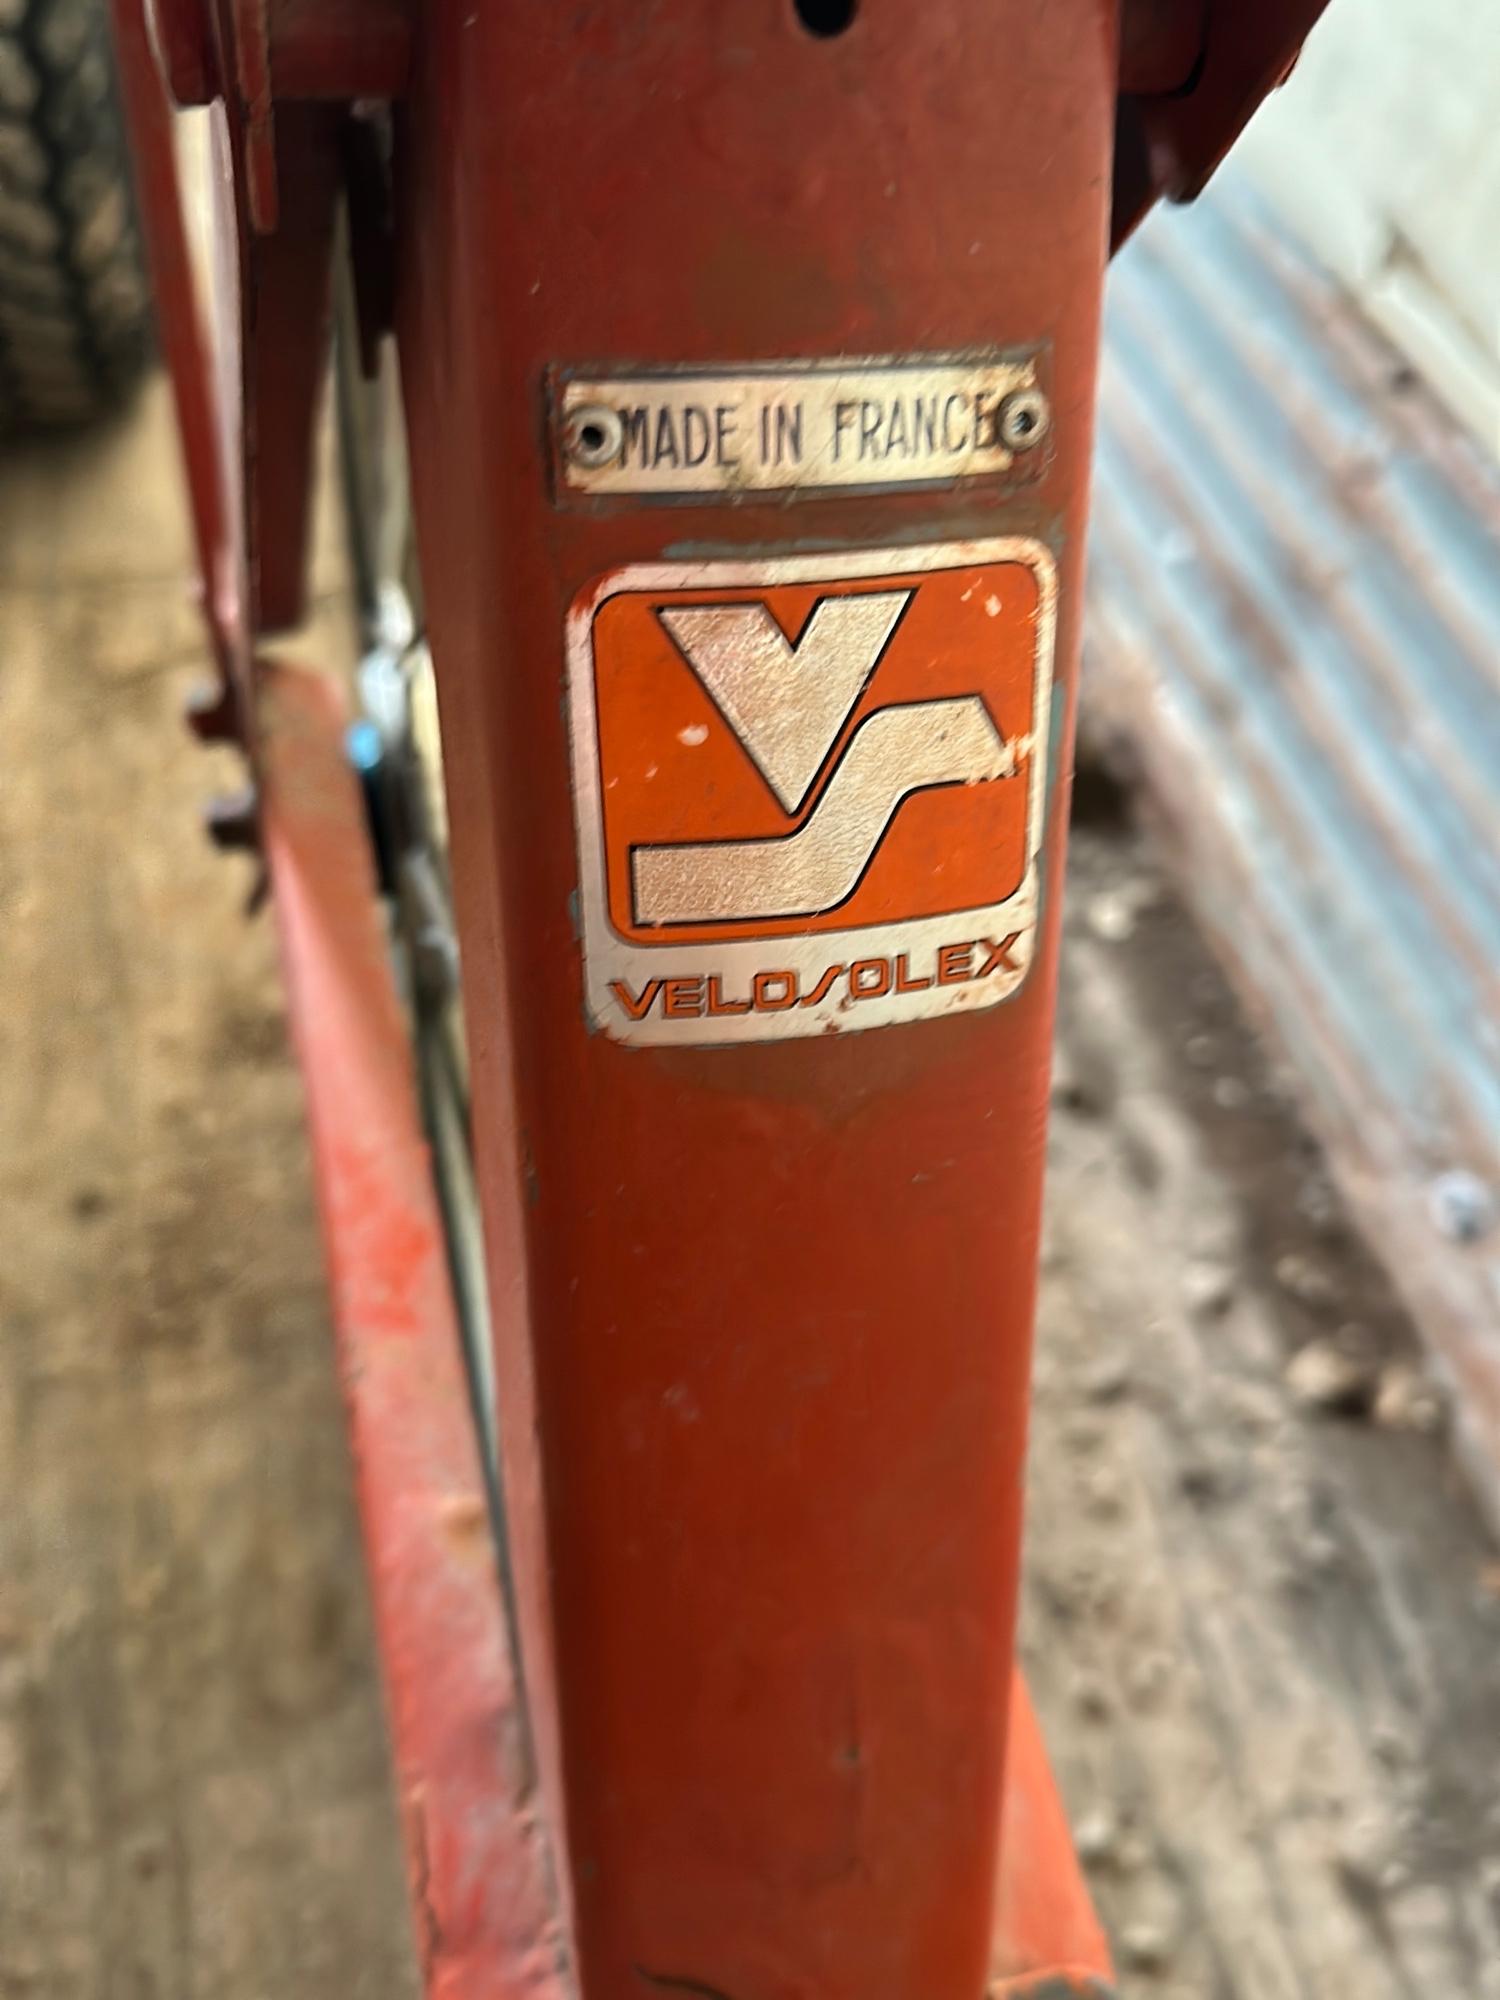 VeloSolex French Motorized Bicycle (Moped)